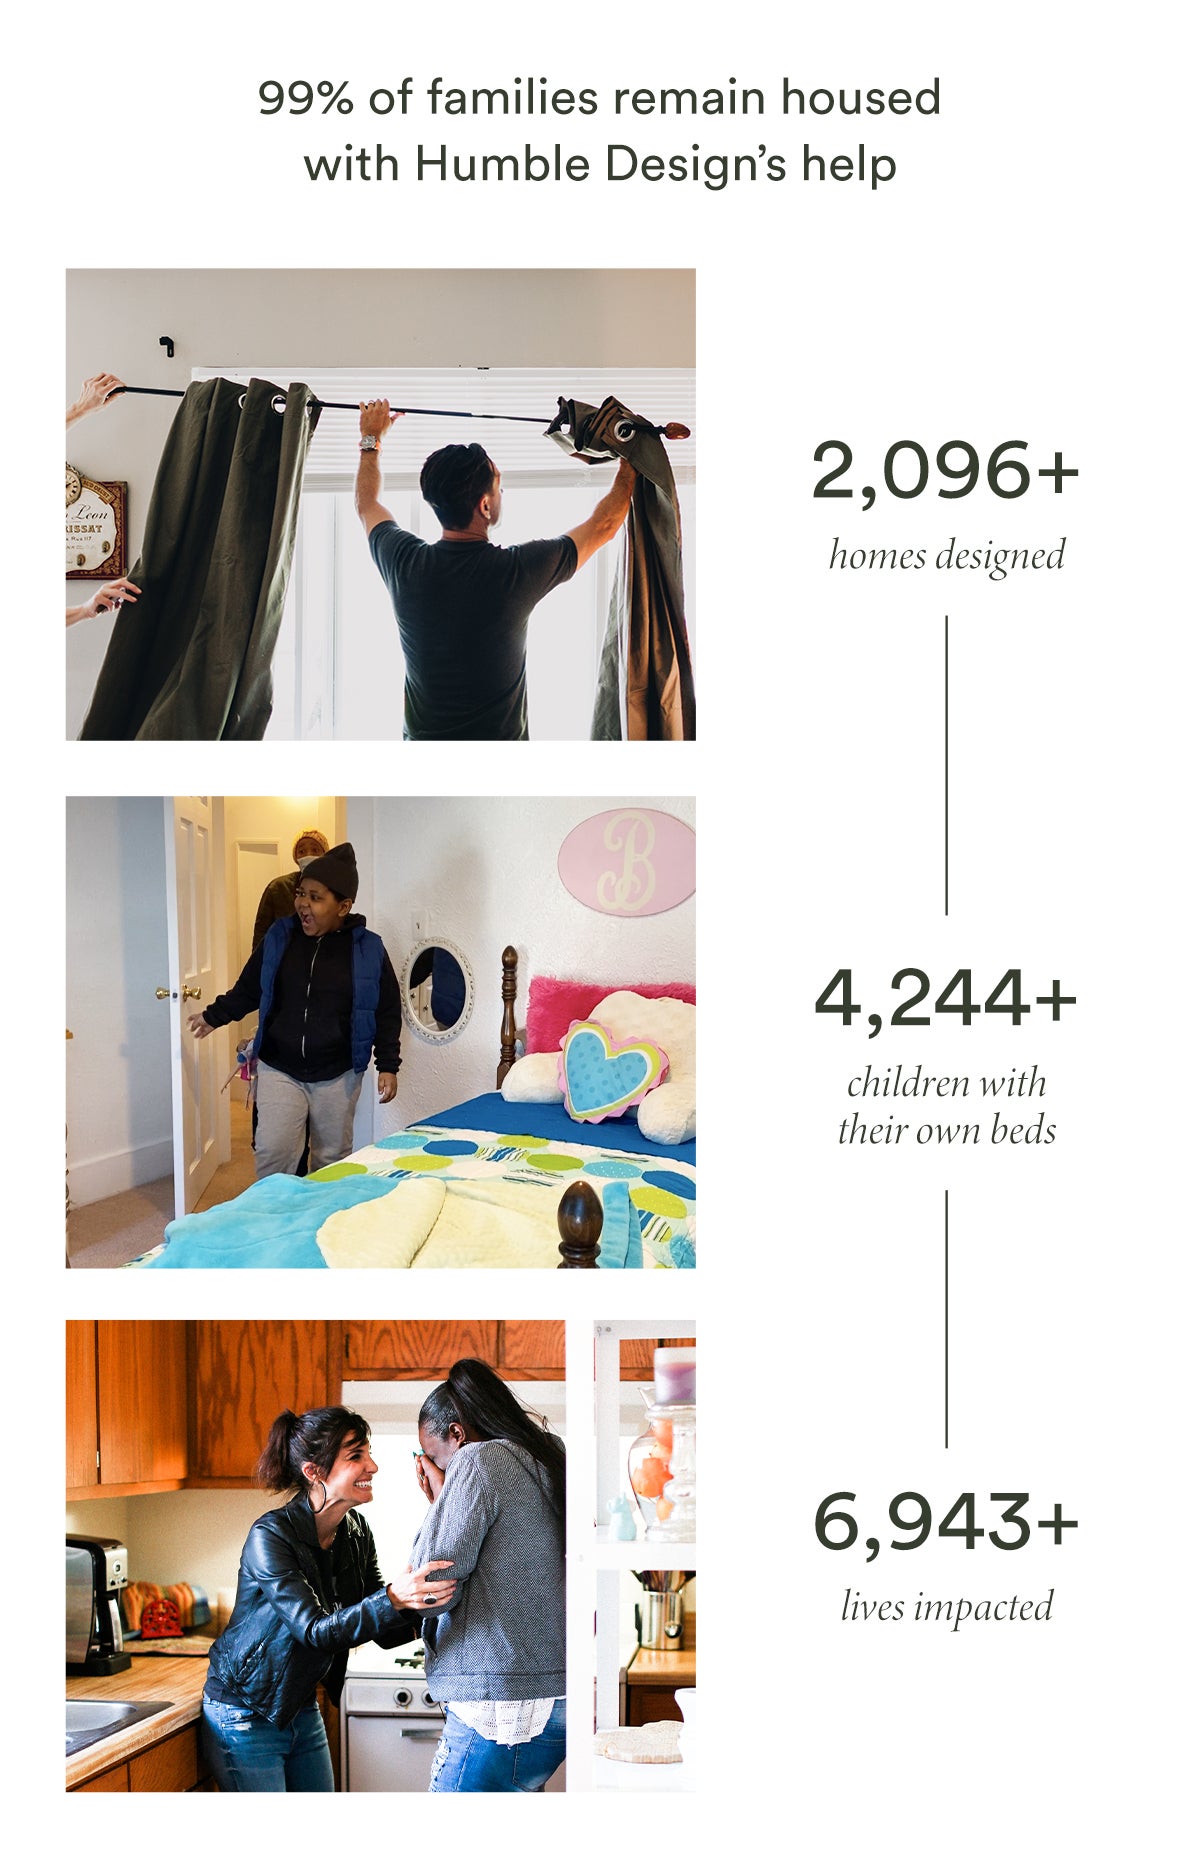 Humble design statistics — over 2000 homes designed